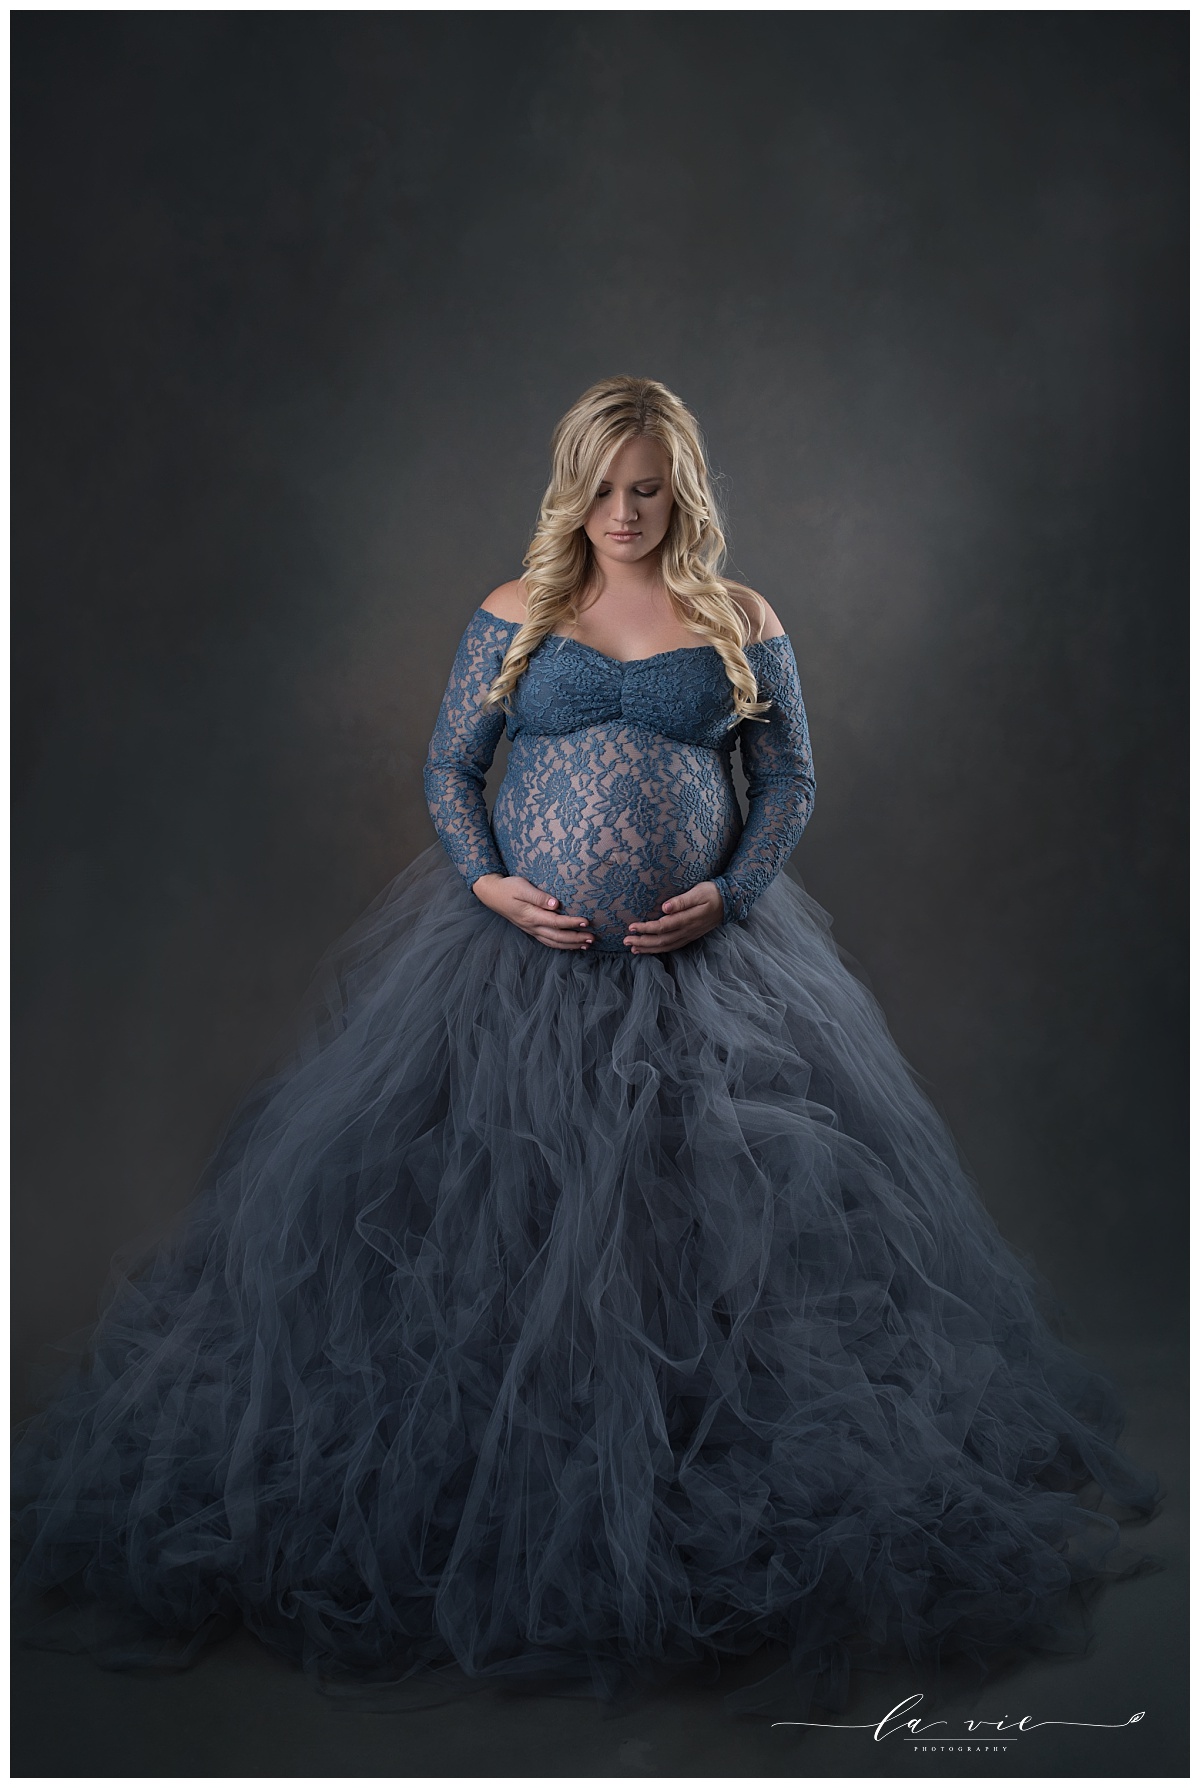 Maternity portrait with large blue tutu gown